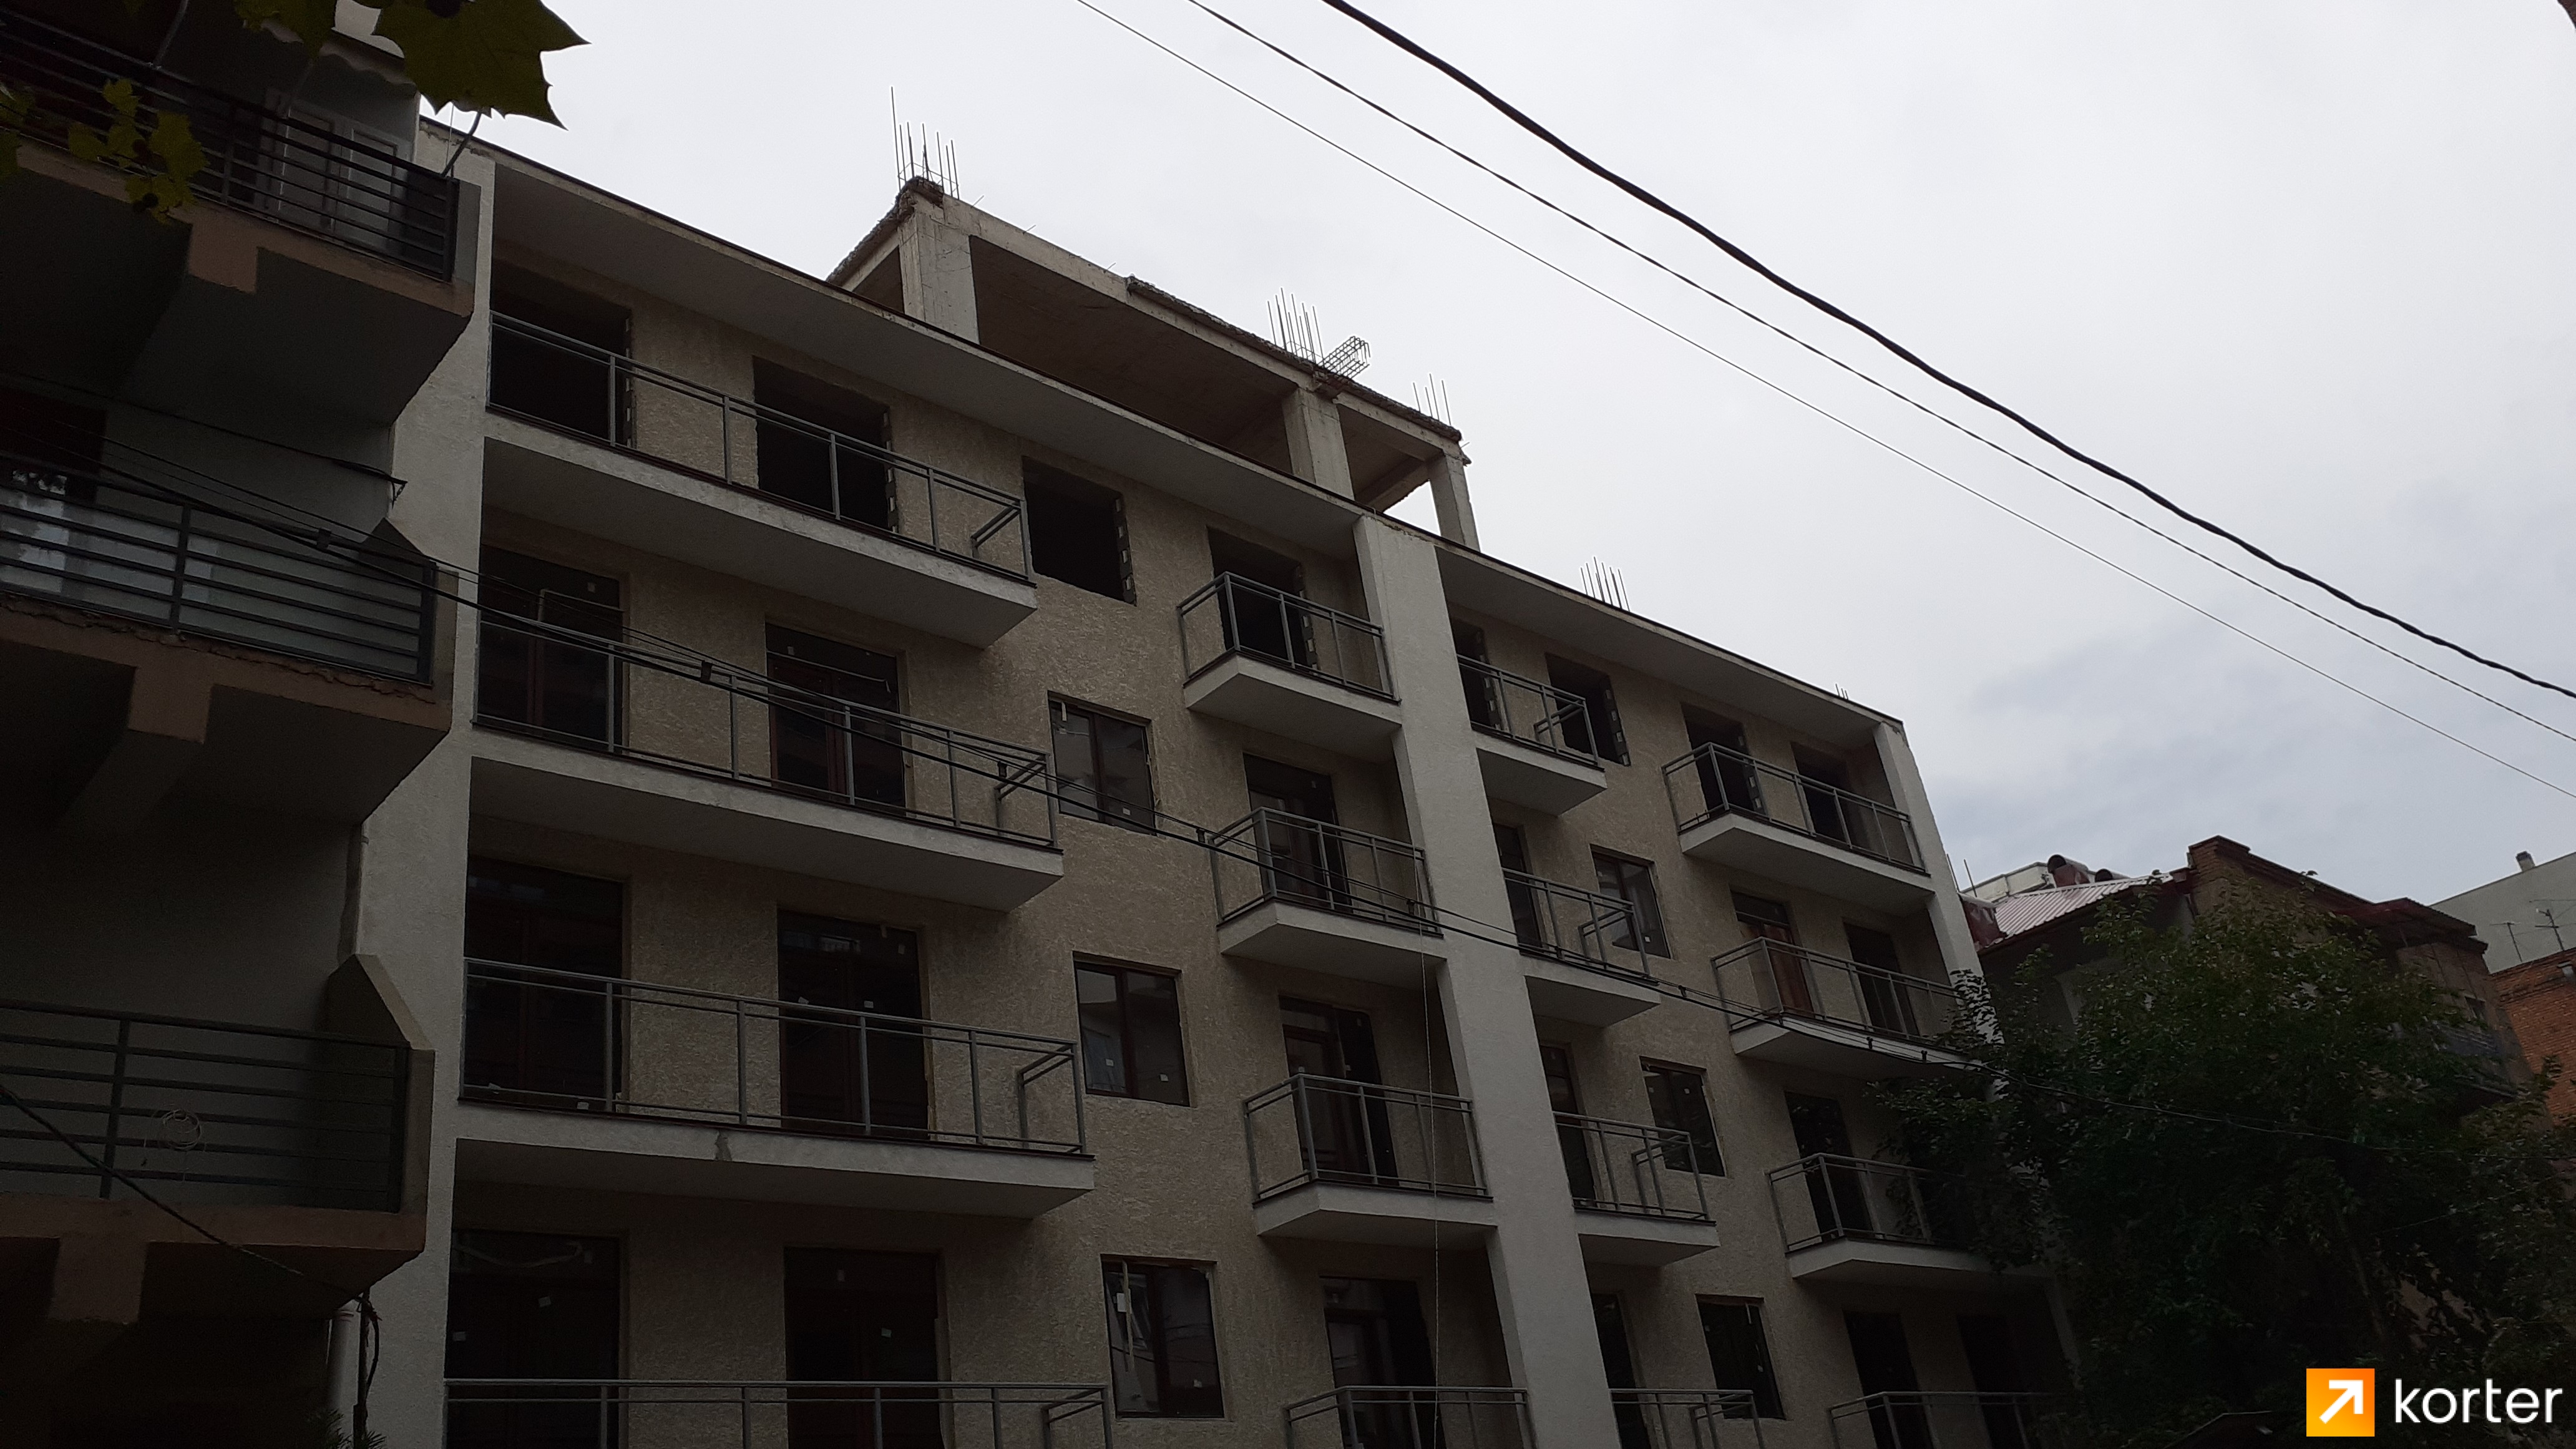 Construction progress House on Mukhadze 4 - Angle 1, September 2019